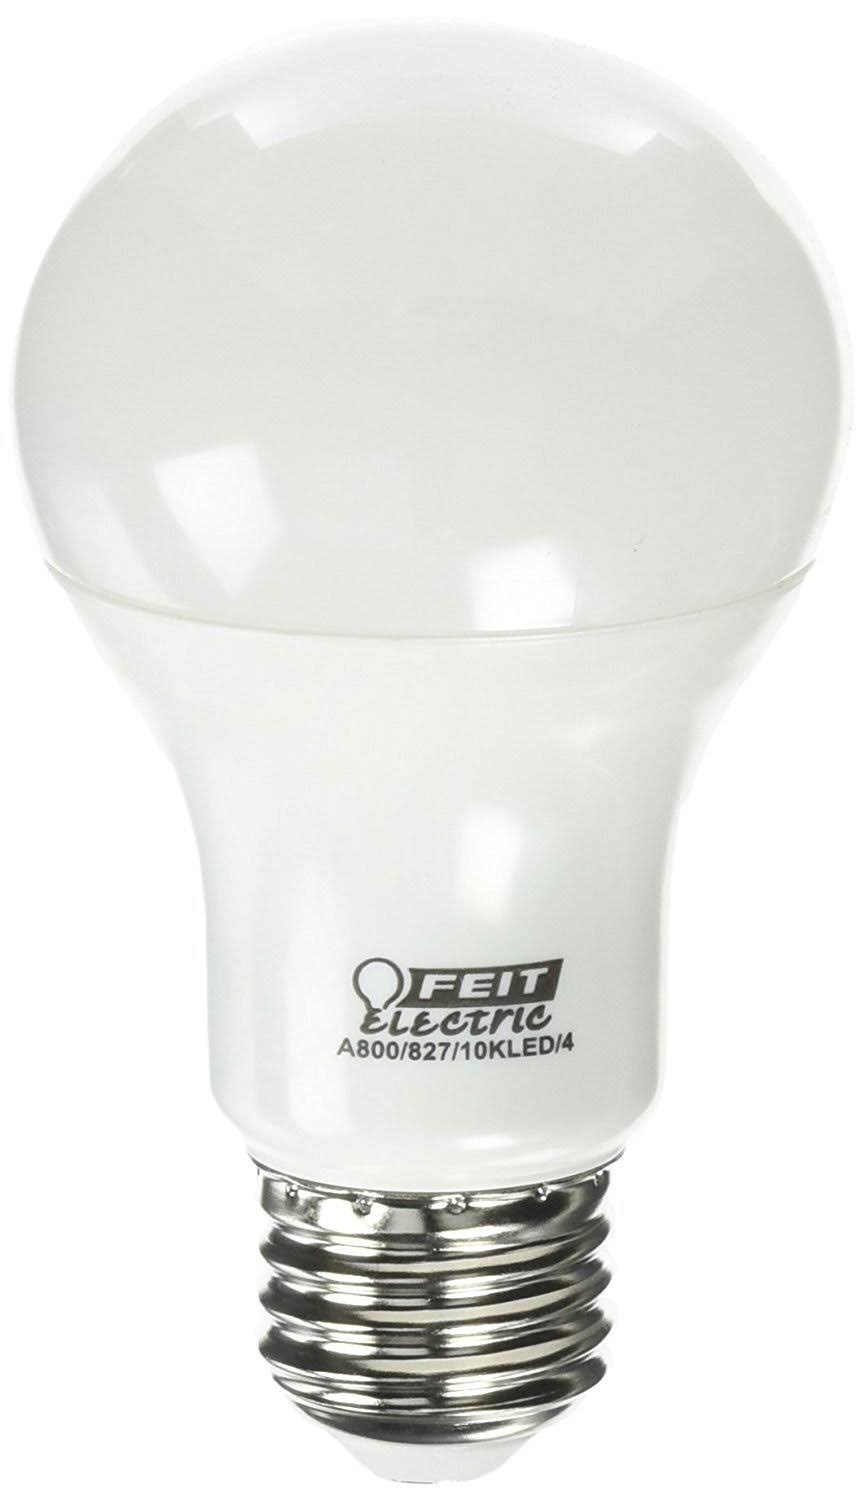 Feit Electric Led Light Bulb - Soft White, 4 Bulbs, 9W